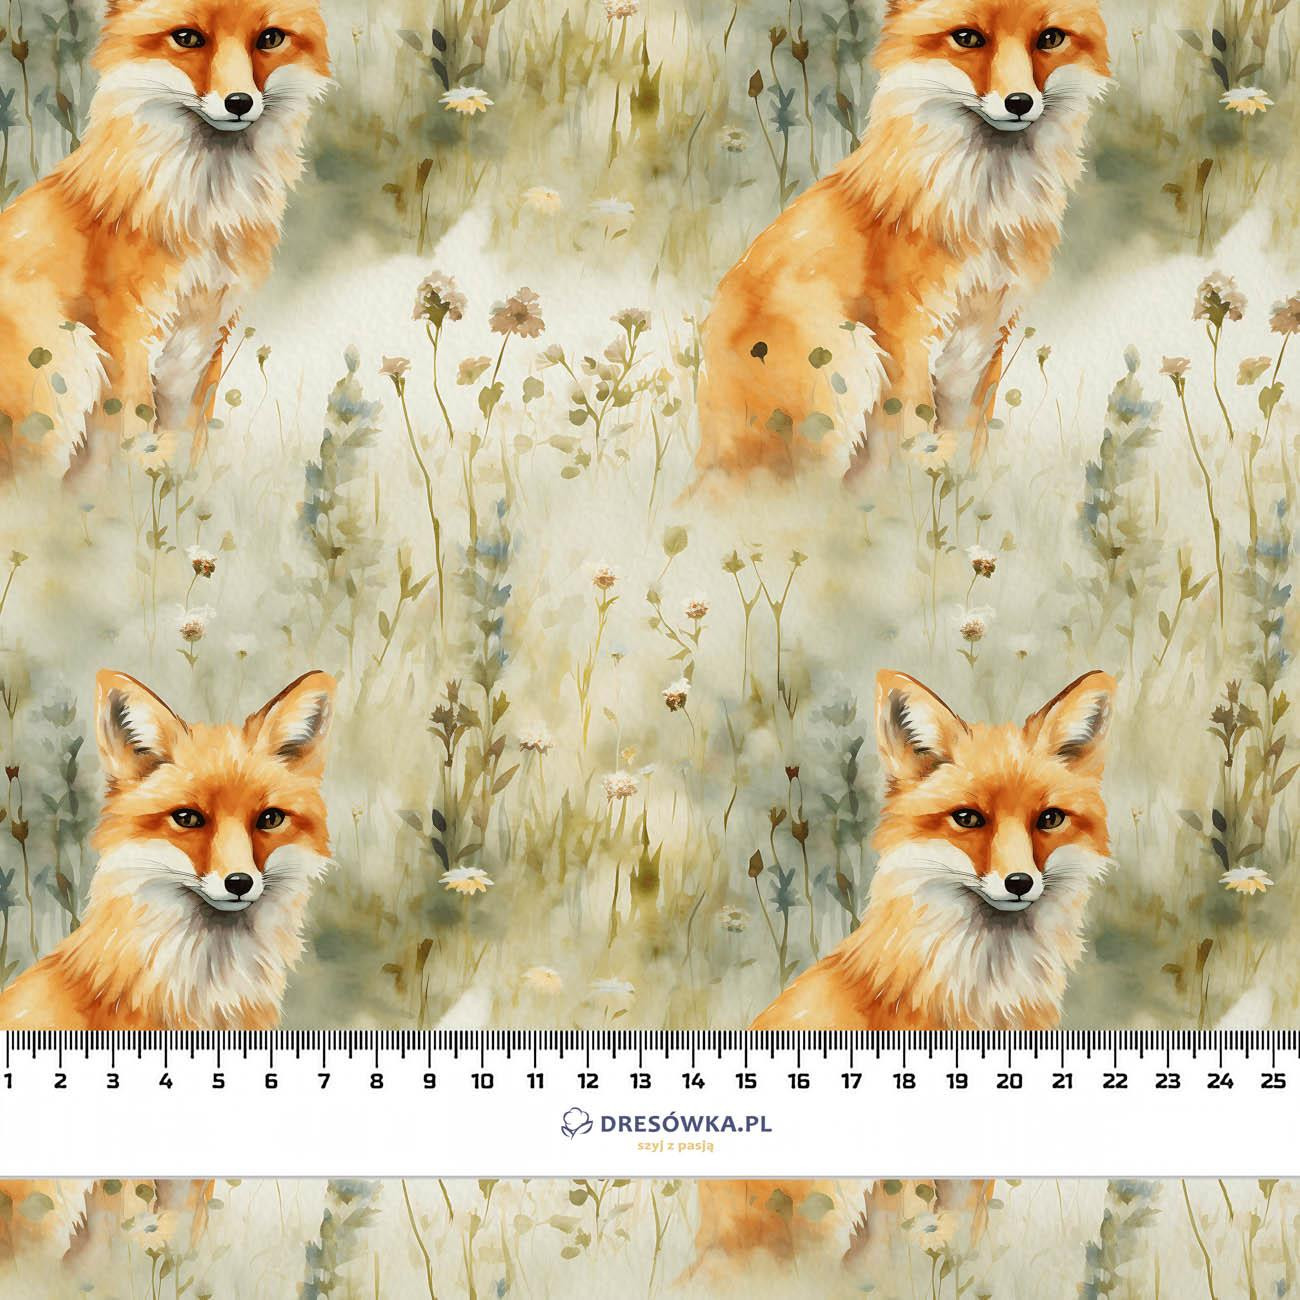 PASTEL FOX PAT. 1 - quick-drying woven fabric